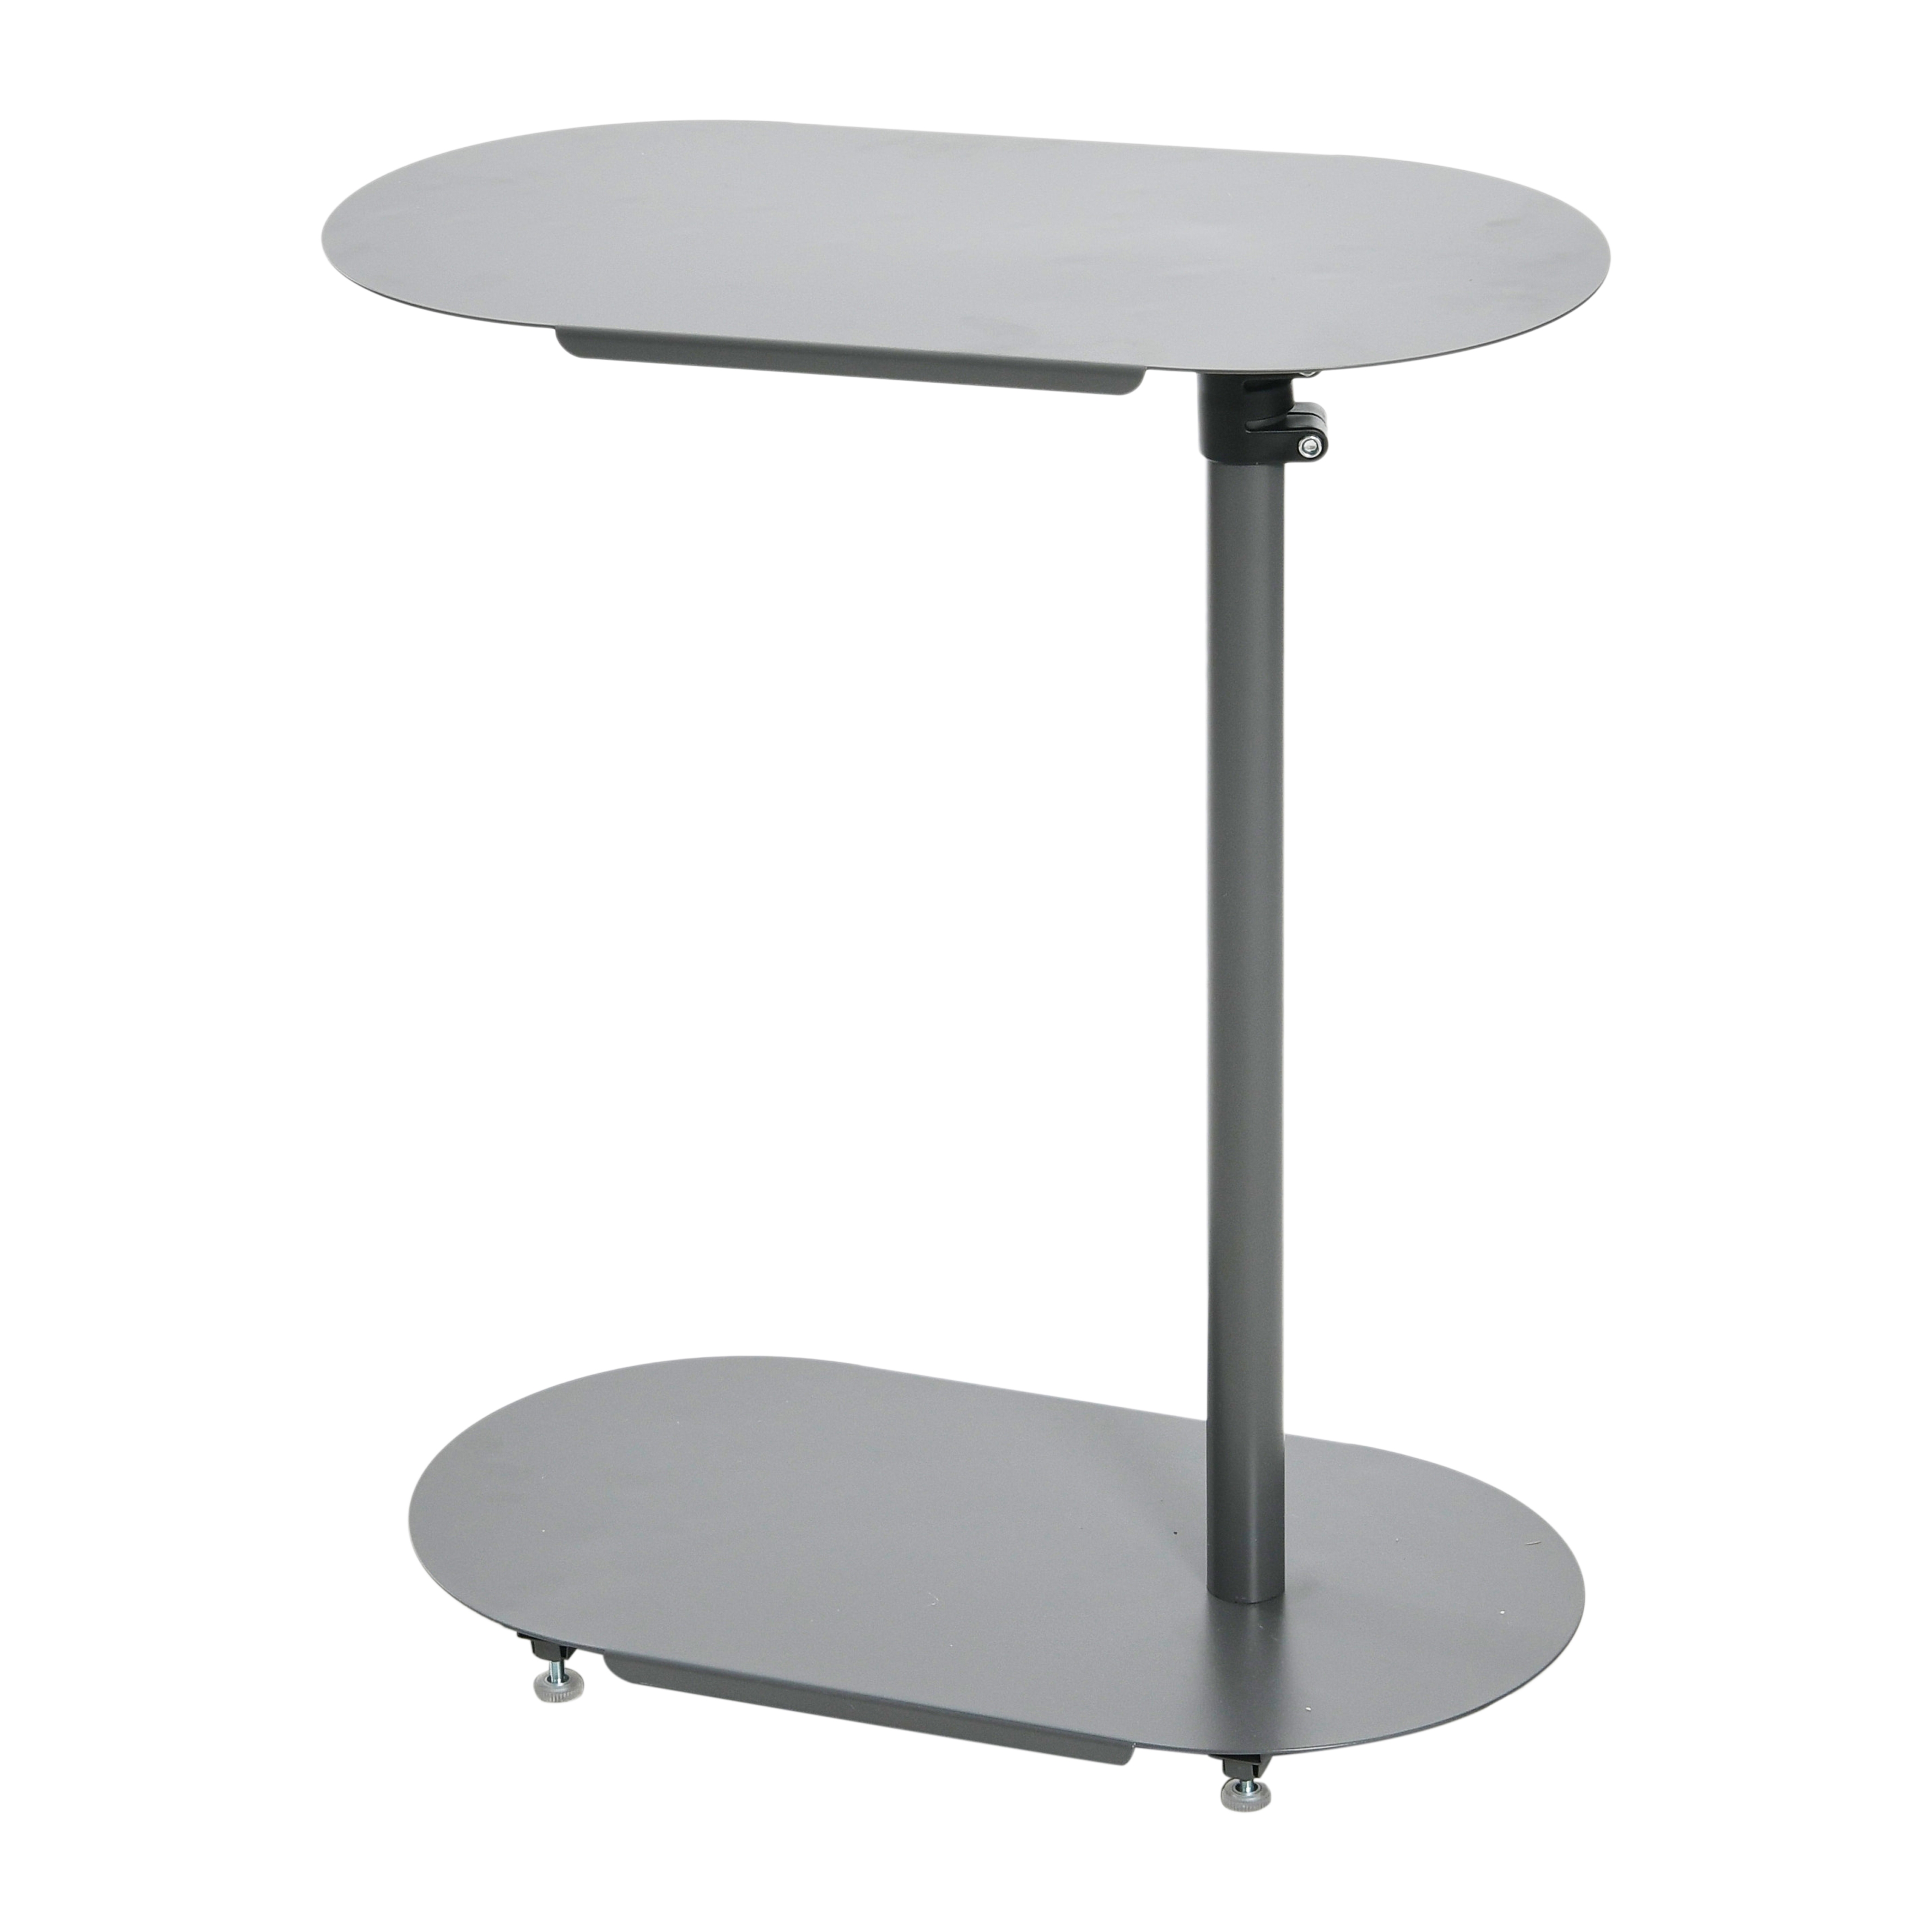 Main + Mesa Modern Adjustable C-Table, Dark Grey - Image 0